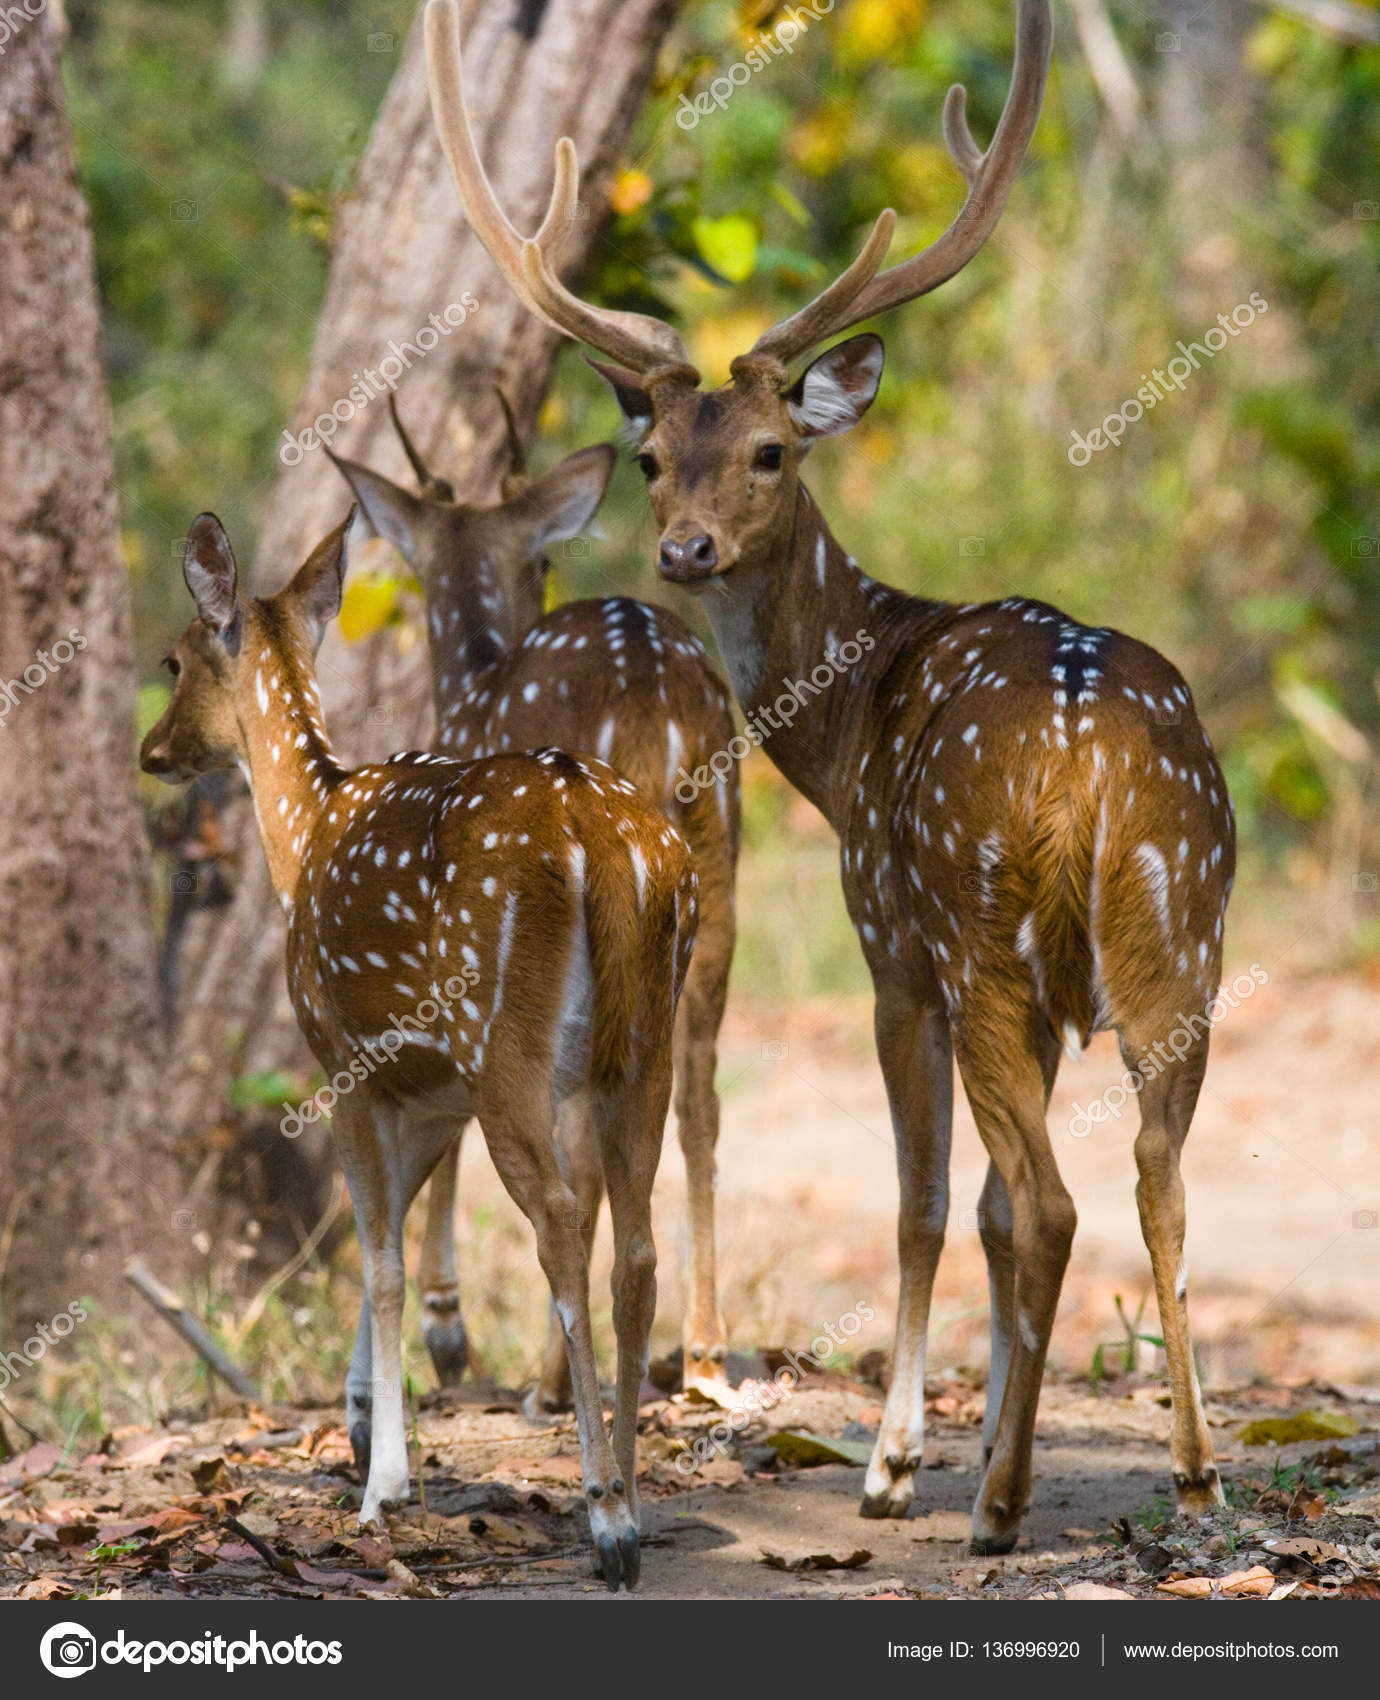 Group of deer in jungle — Stock Photo © GUDKOVANDREY #136996920